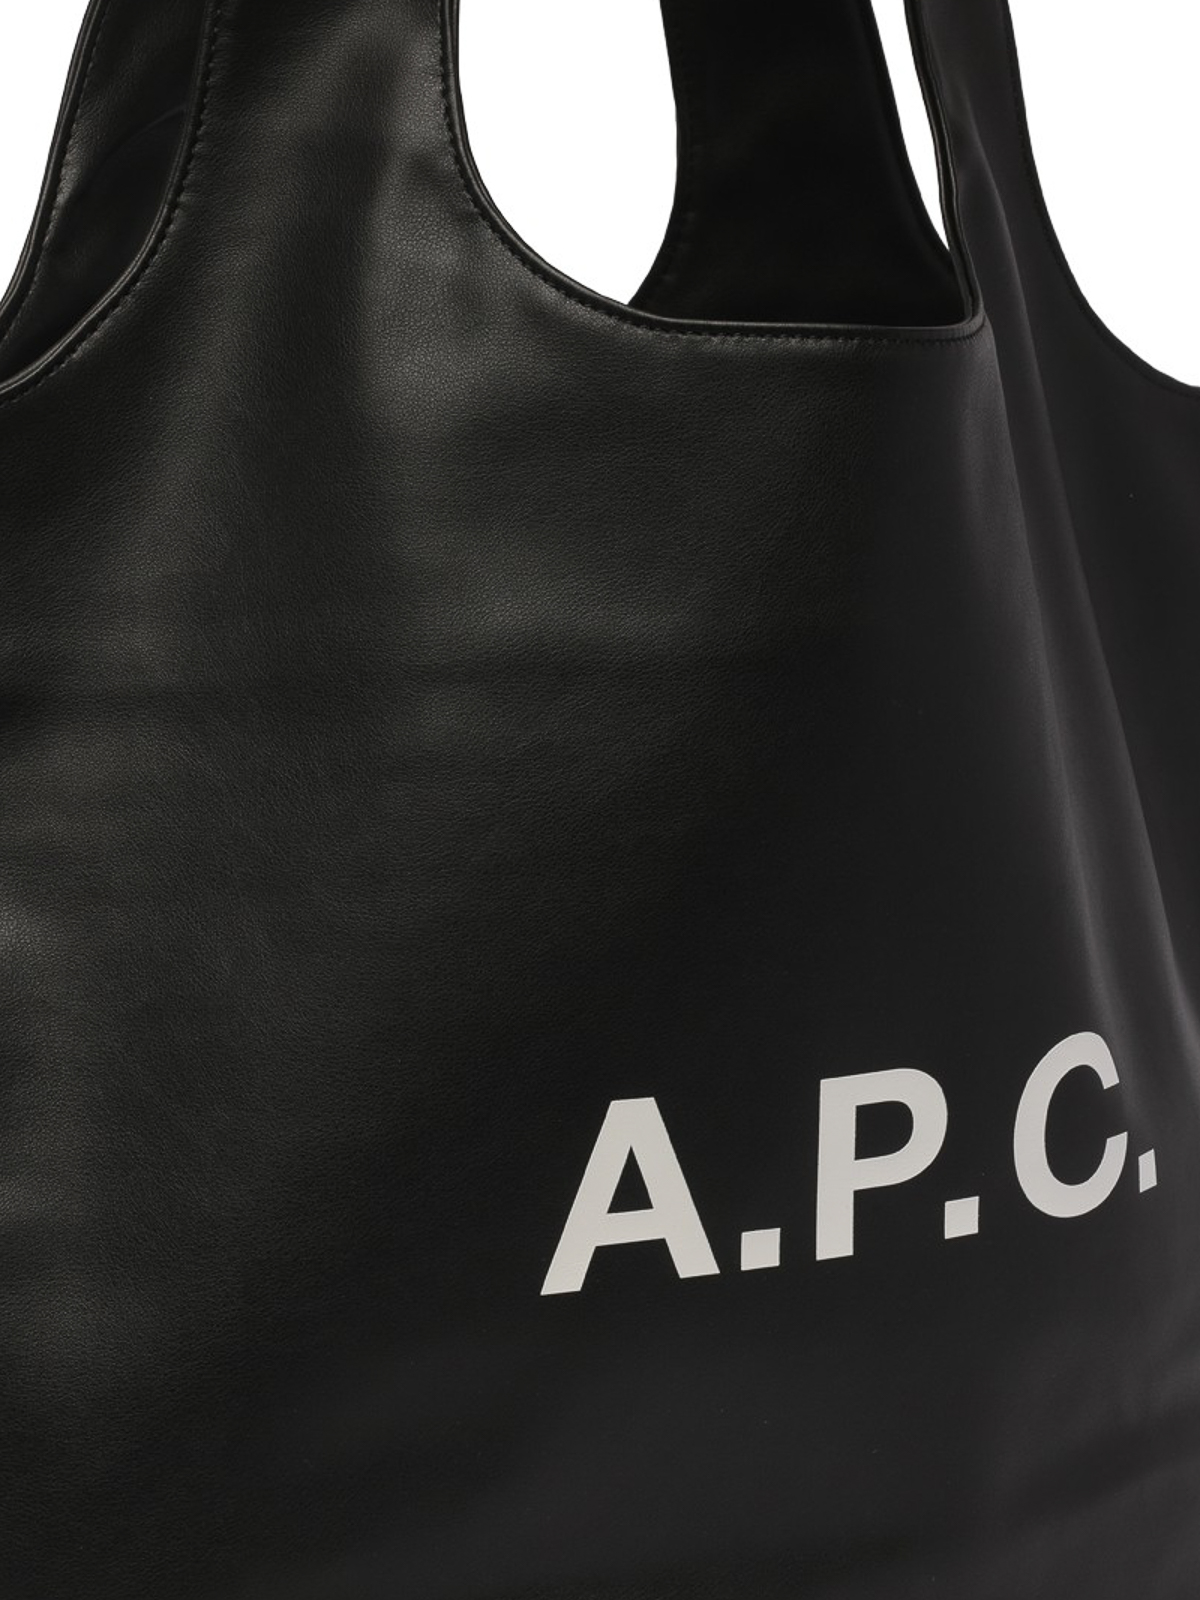 A.P.C. Ninon Tote Bag